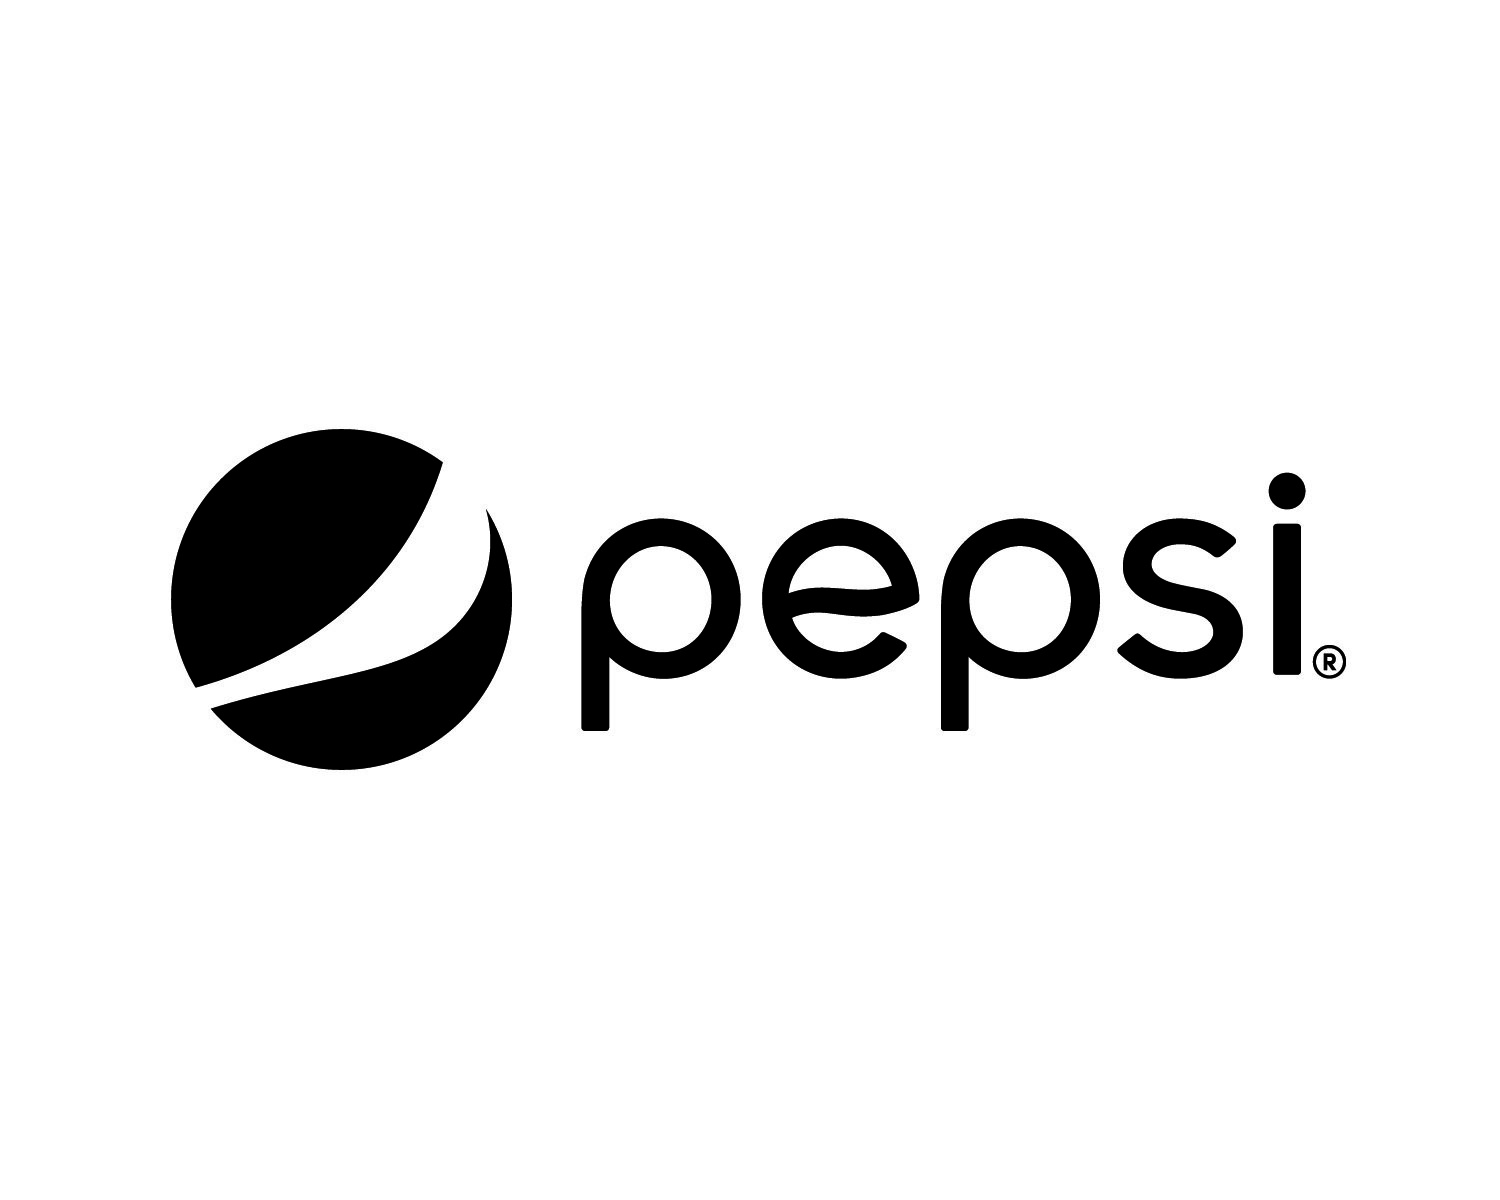 Pepsi logo NB B&W.jpg